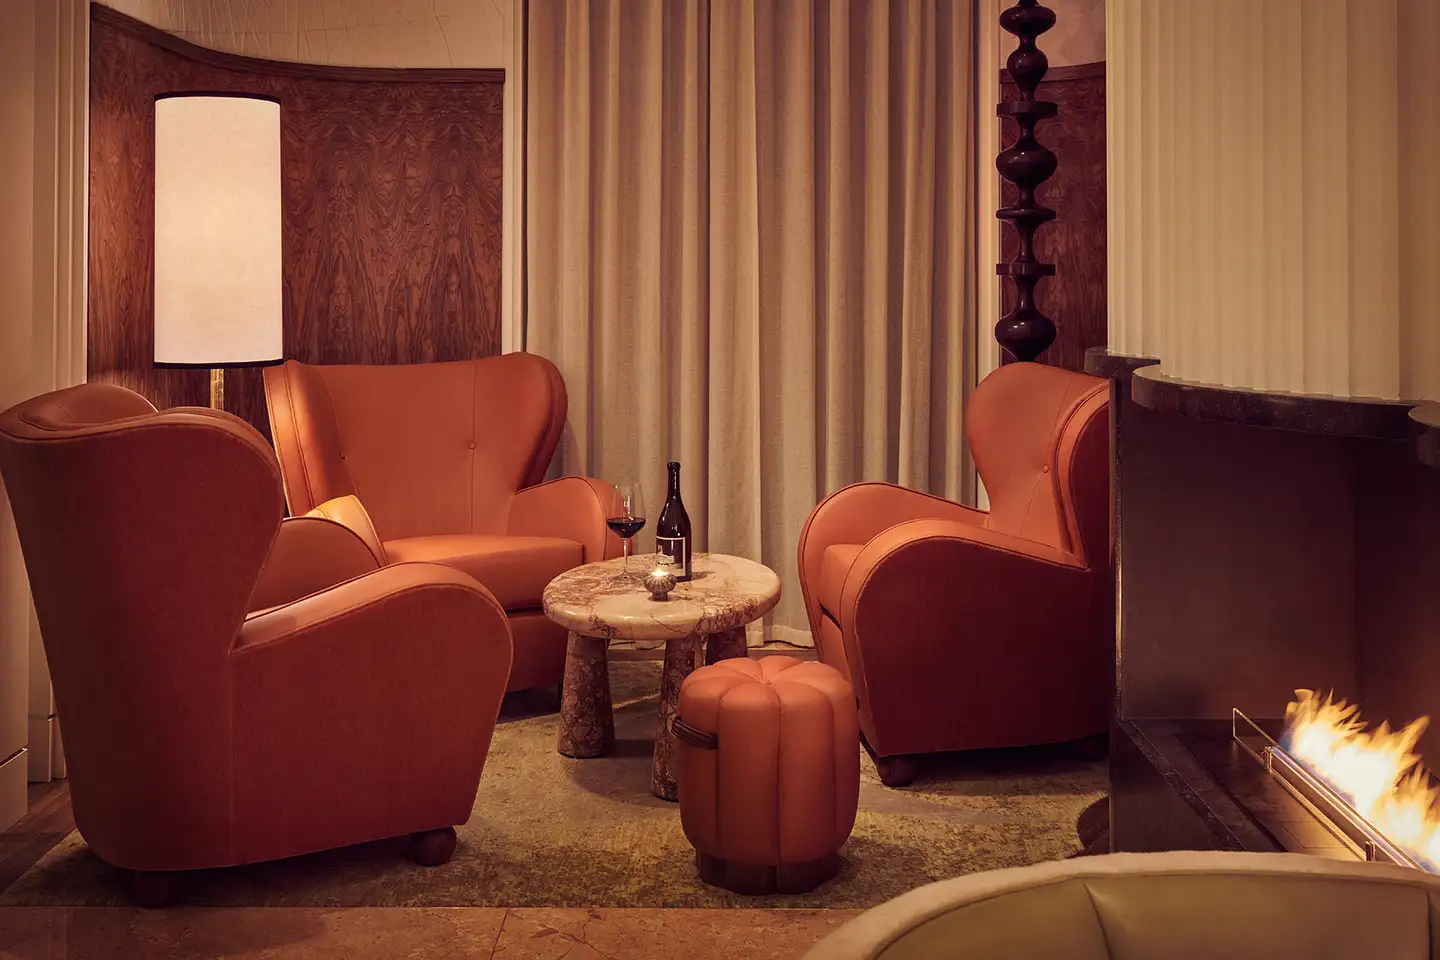 Modern orange armchairs